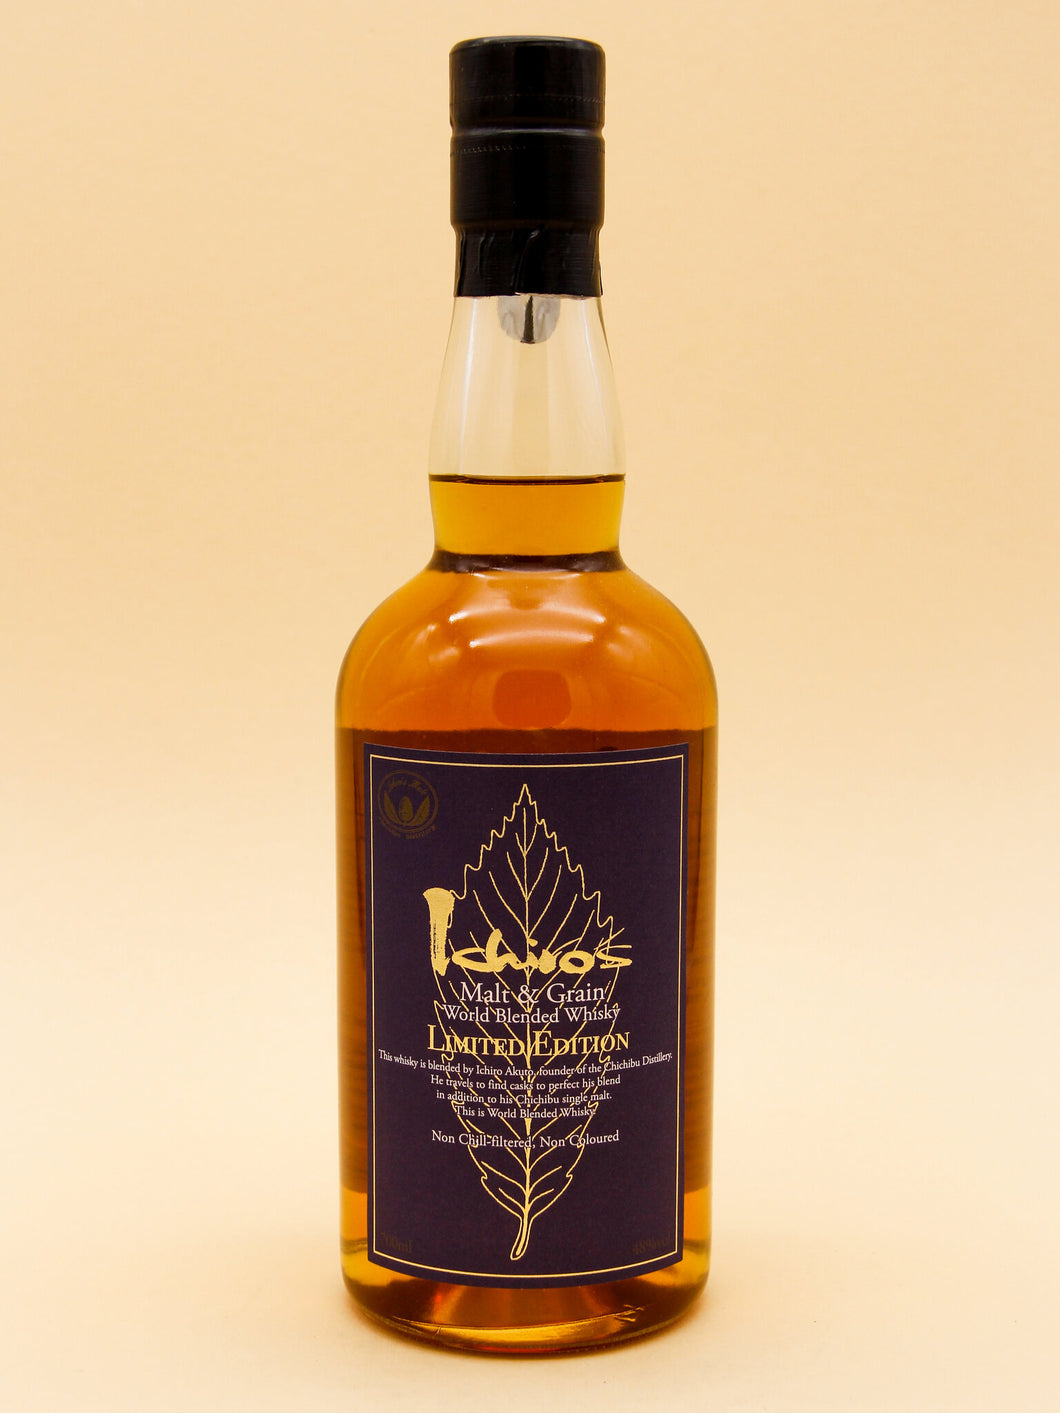 Chichibu, Ichiros Malt & Grain Limited Edition World Blended Whisky (48%, 70cl)